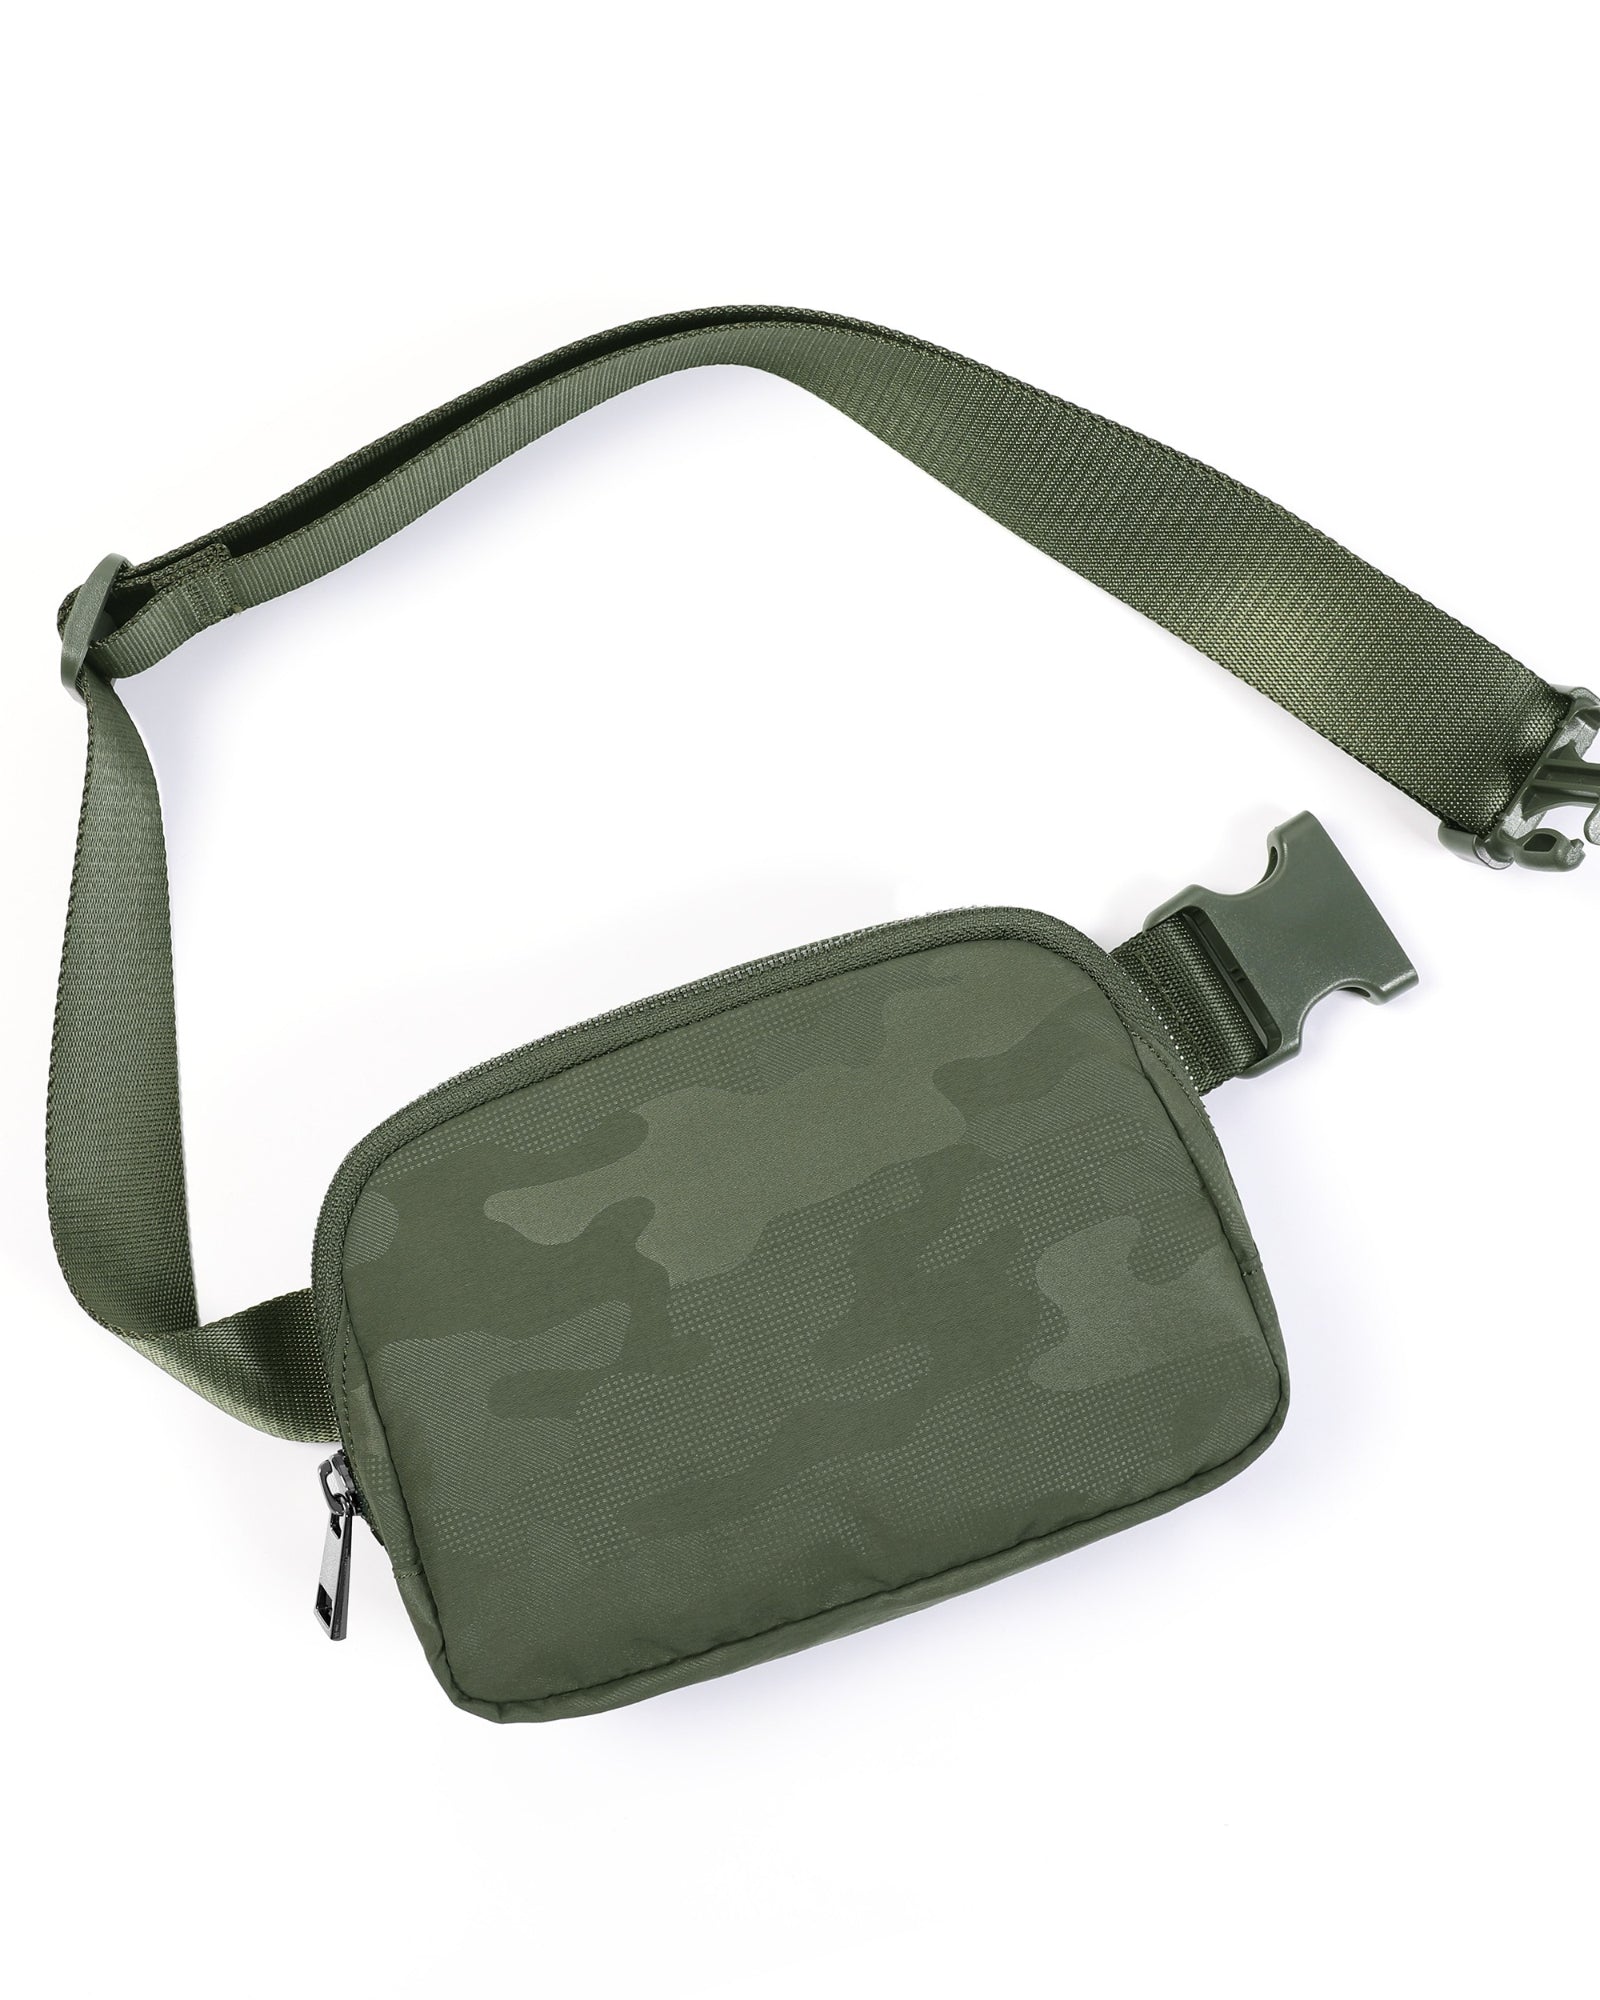 Trendy Patterned Mini Belt Bag Camo Green 8" x 2" x 5.5" - ododos